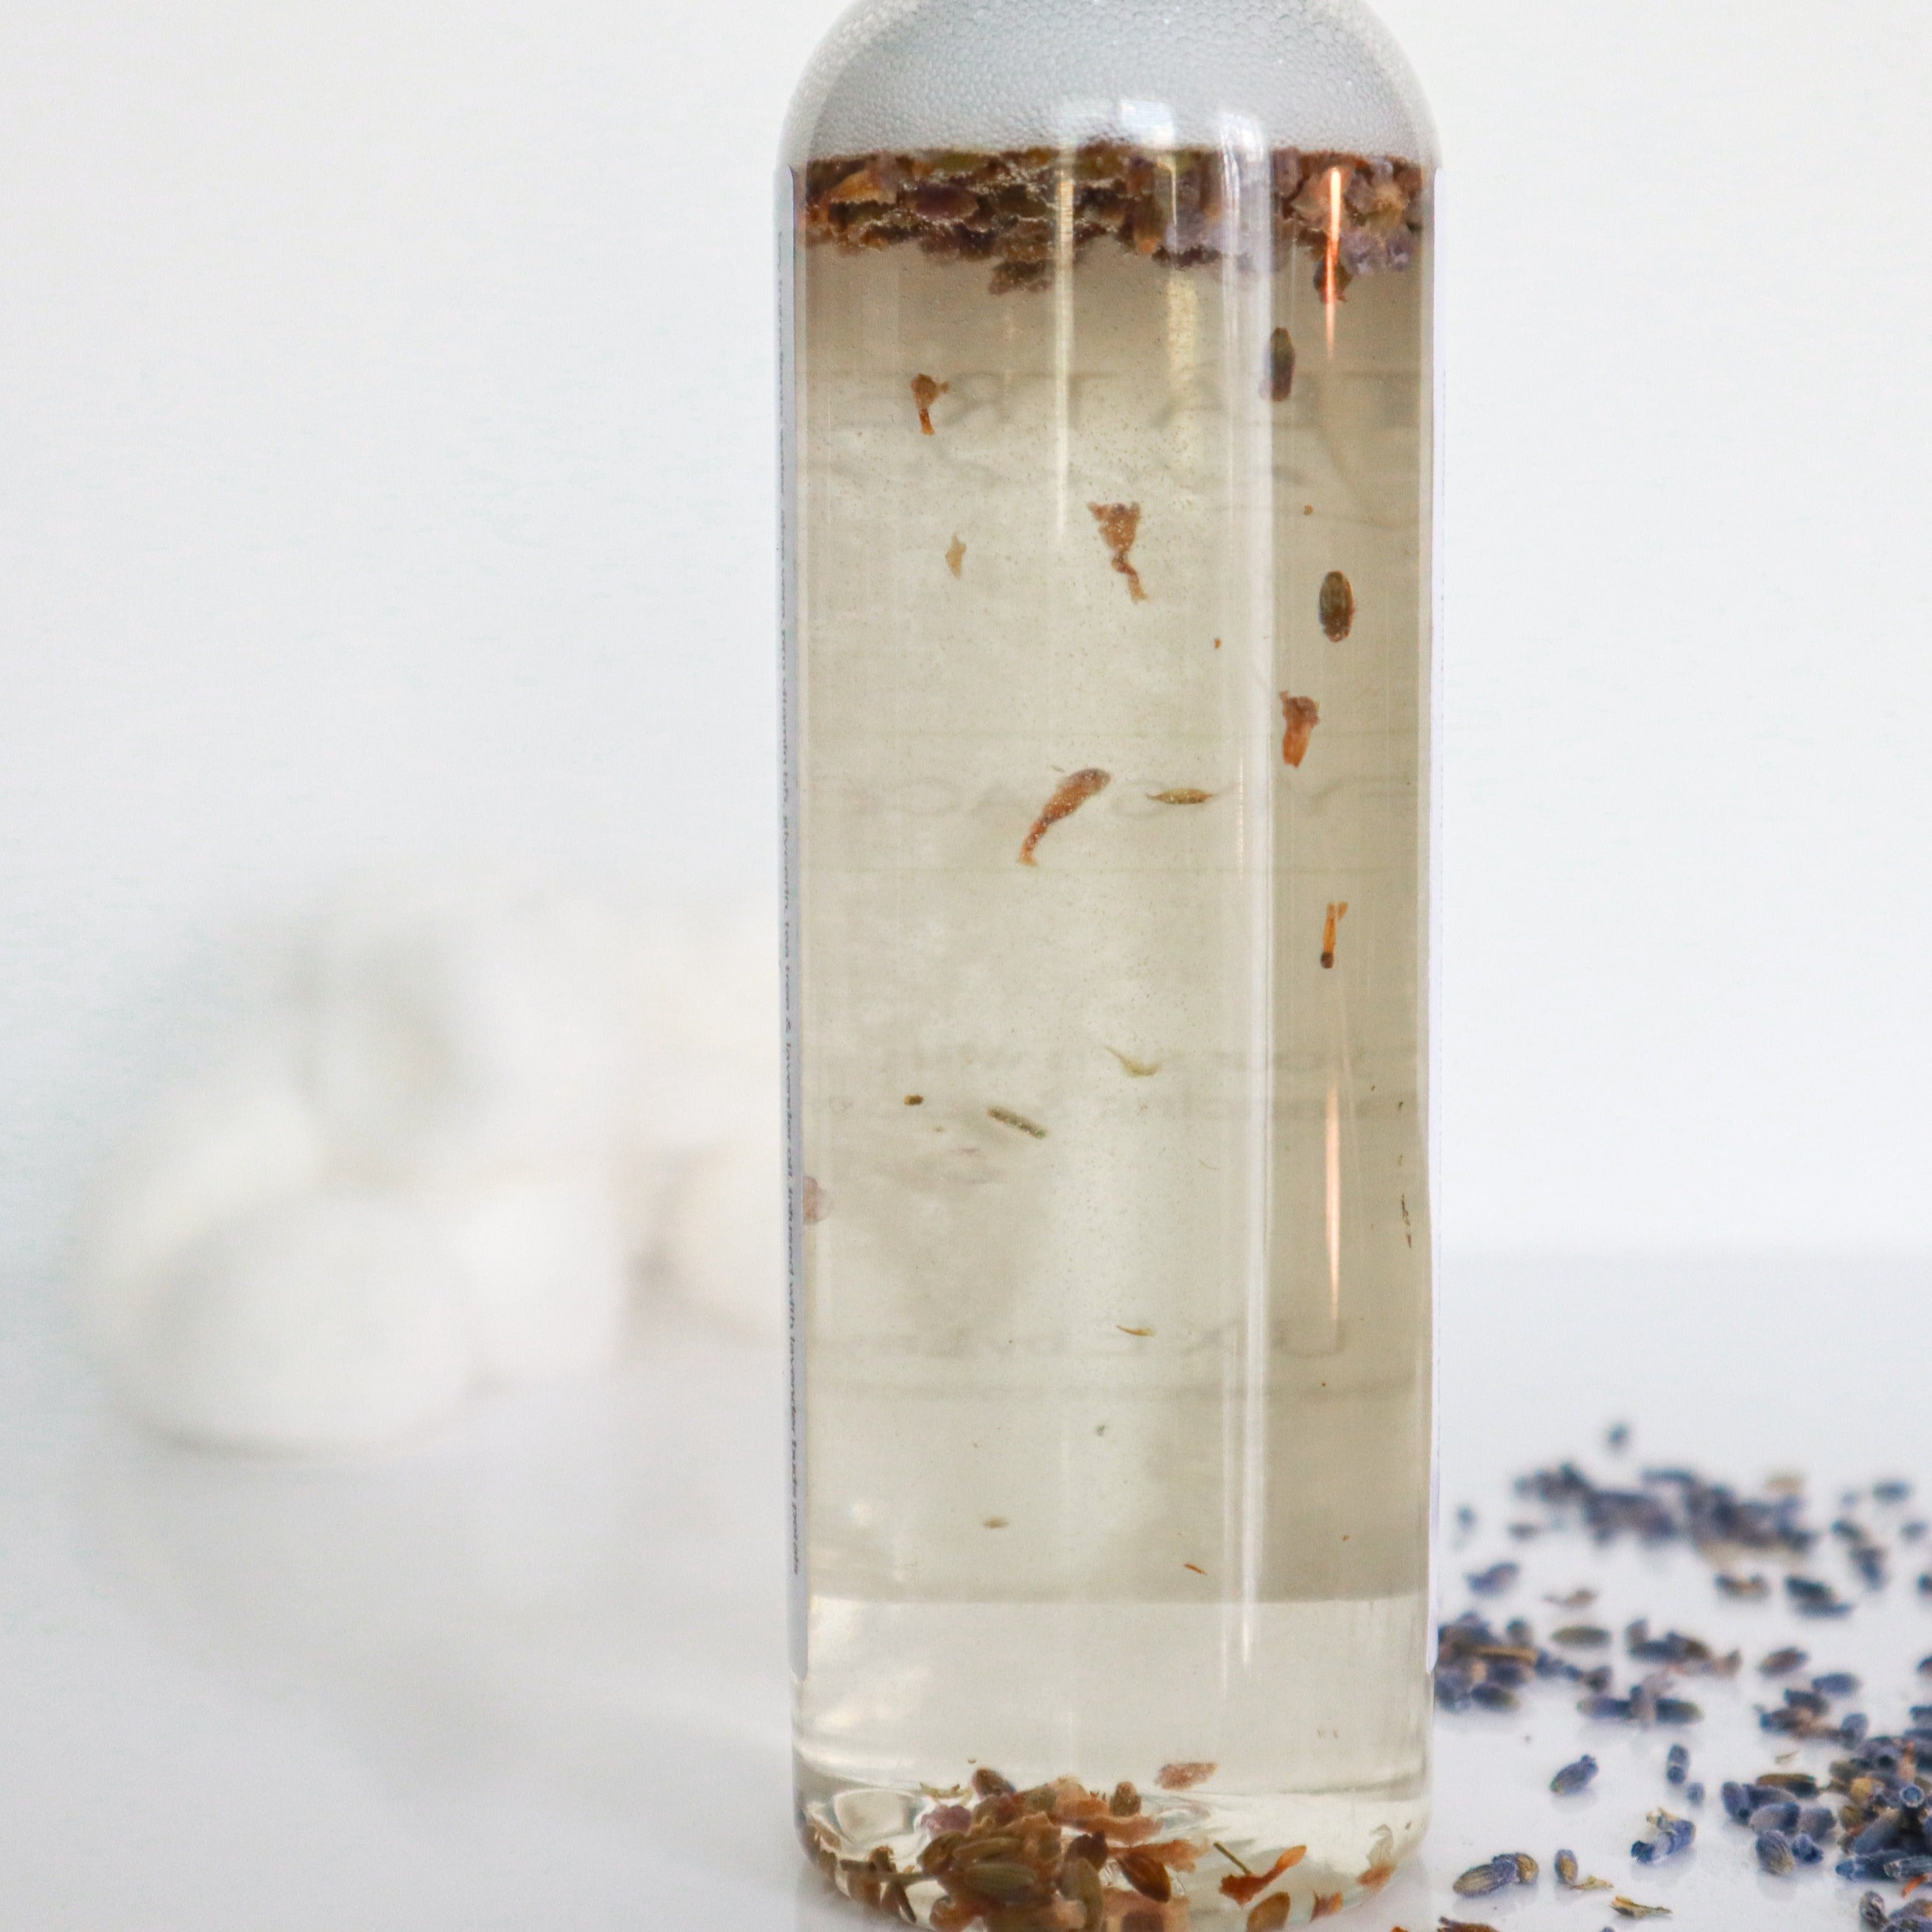 Tea Tree + Lavender Clarifying Tonic